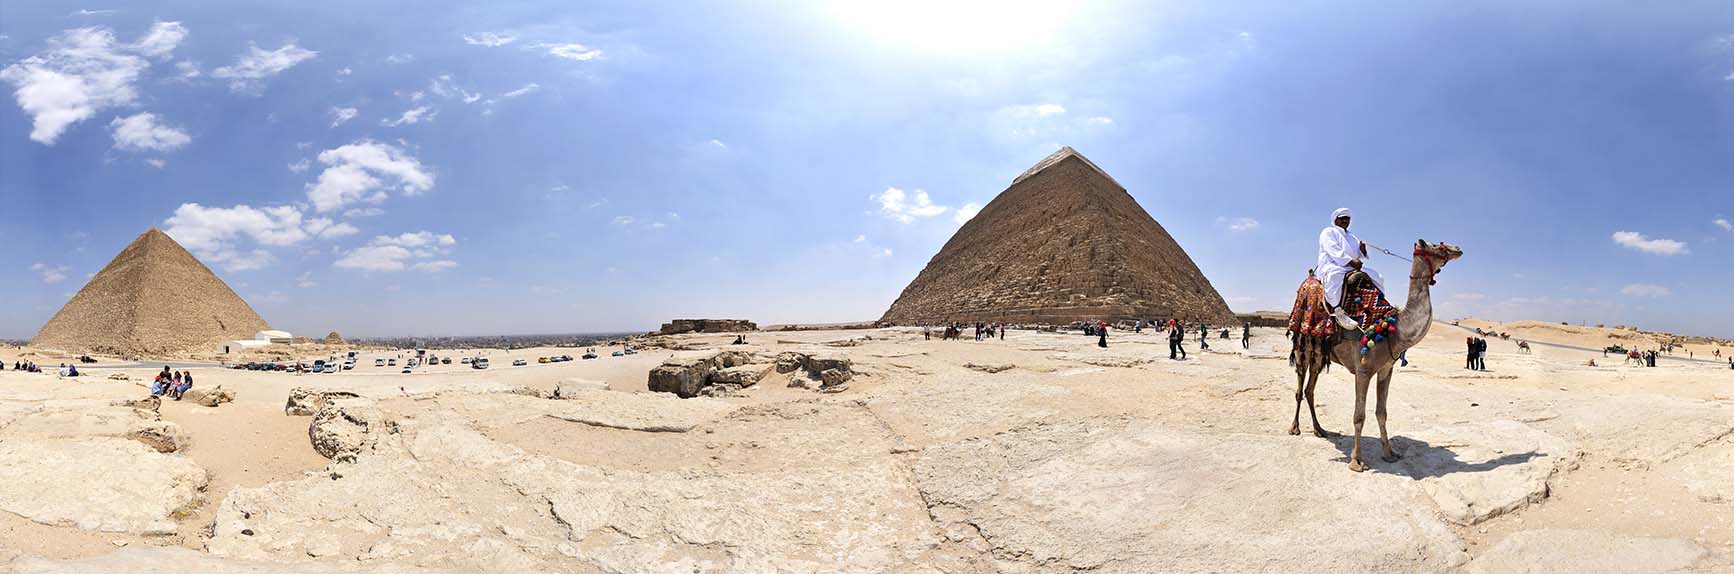 The Giza Pyramids, Egypt